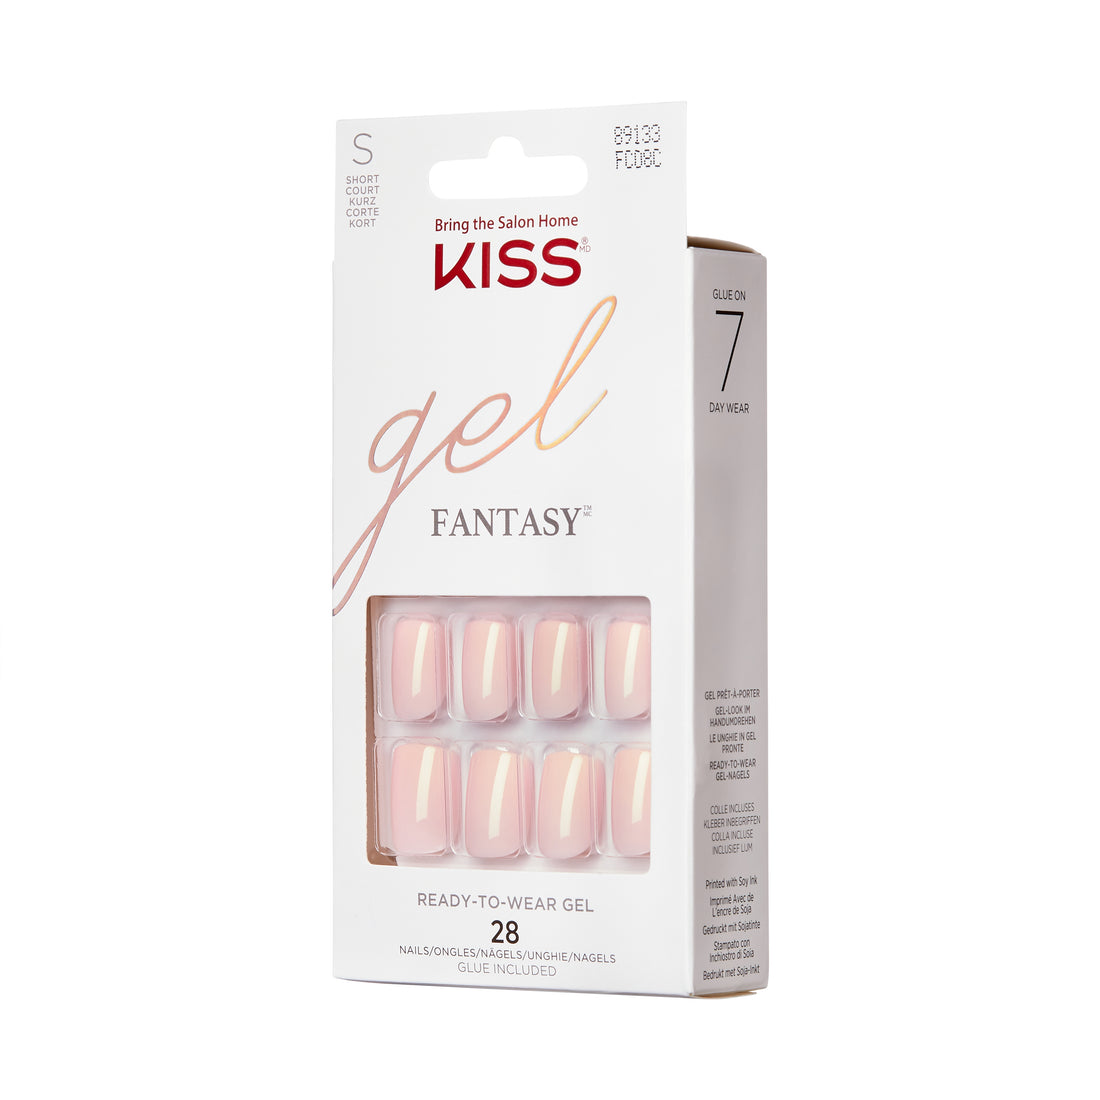 KISS Gel Fantasy Nails -  After Last Night